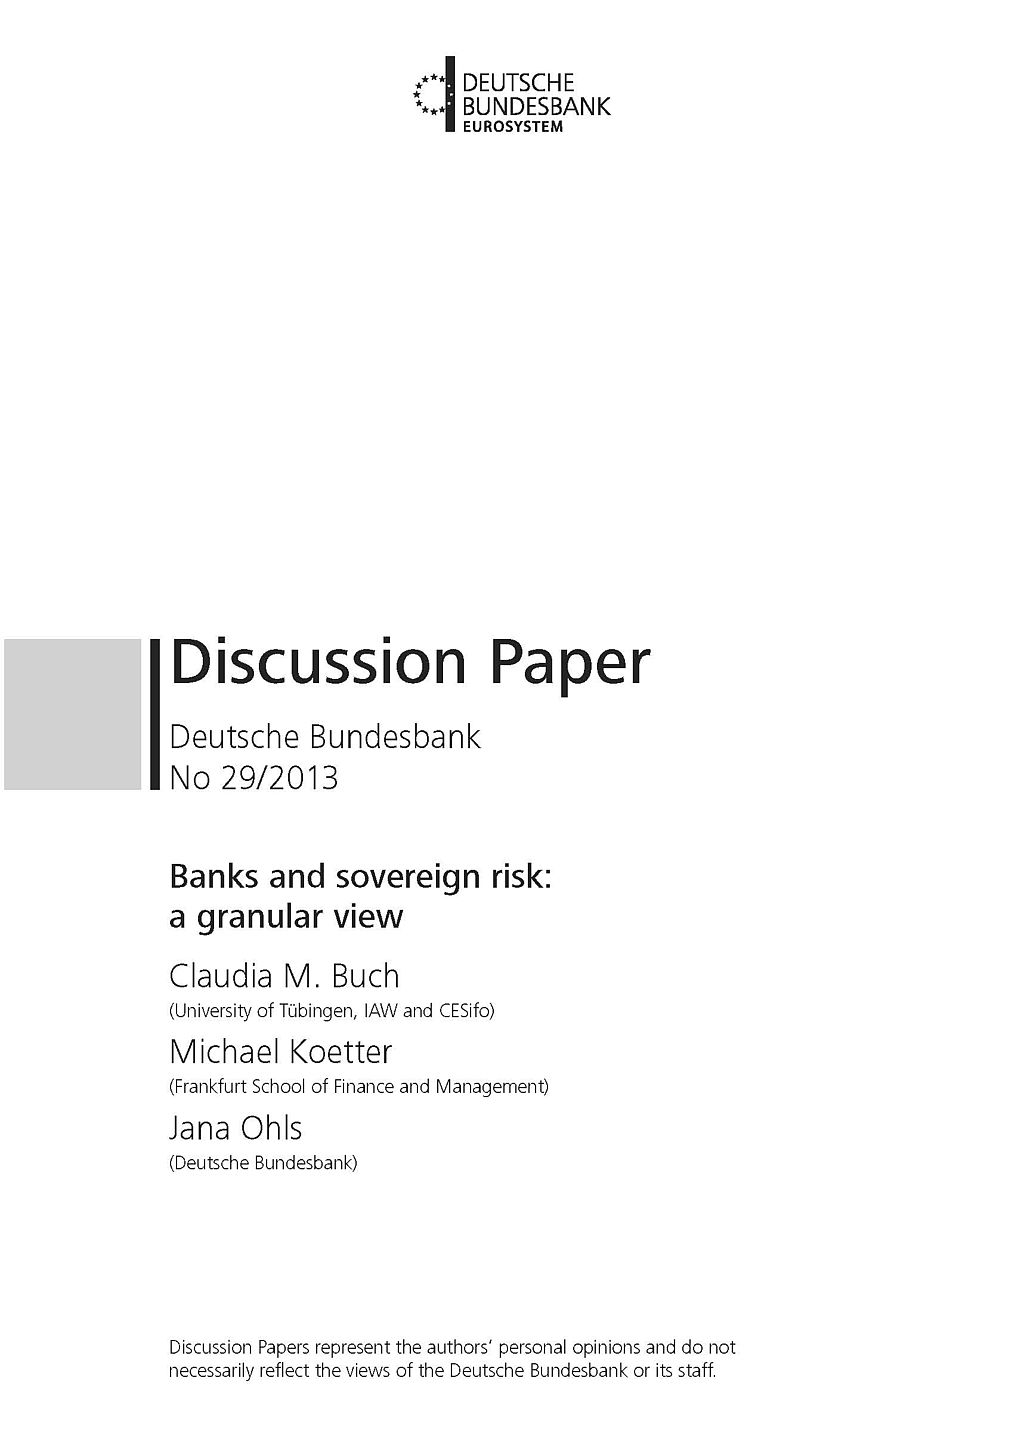 cover_Deutsche-Bundesbank-Discussion-Paper_2013-29.jpg